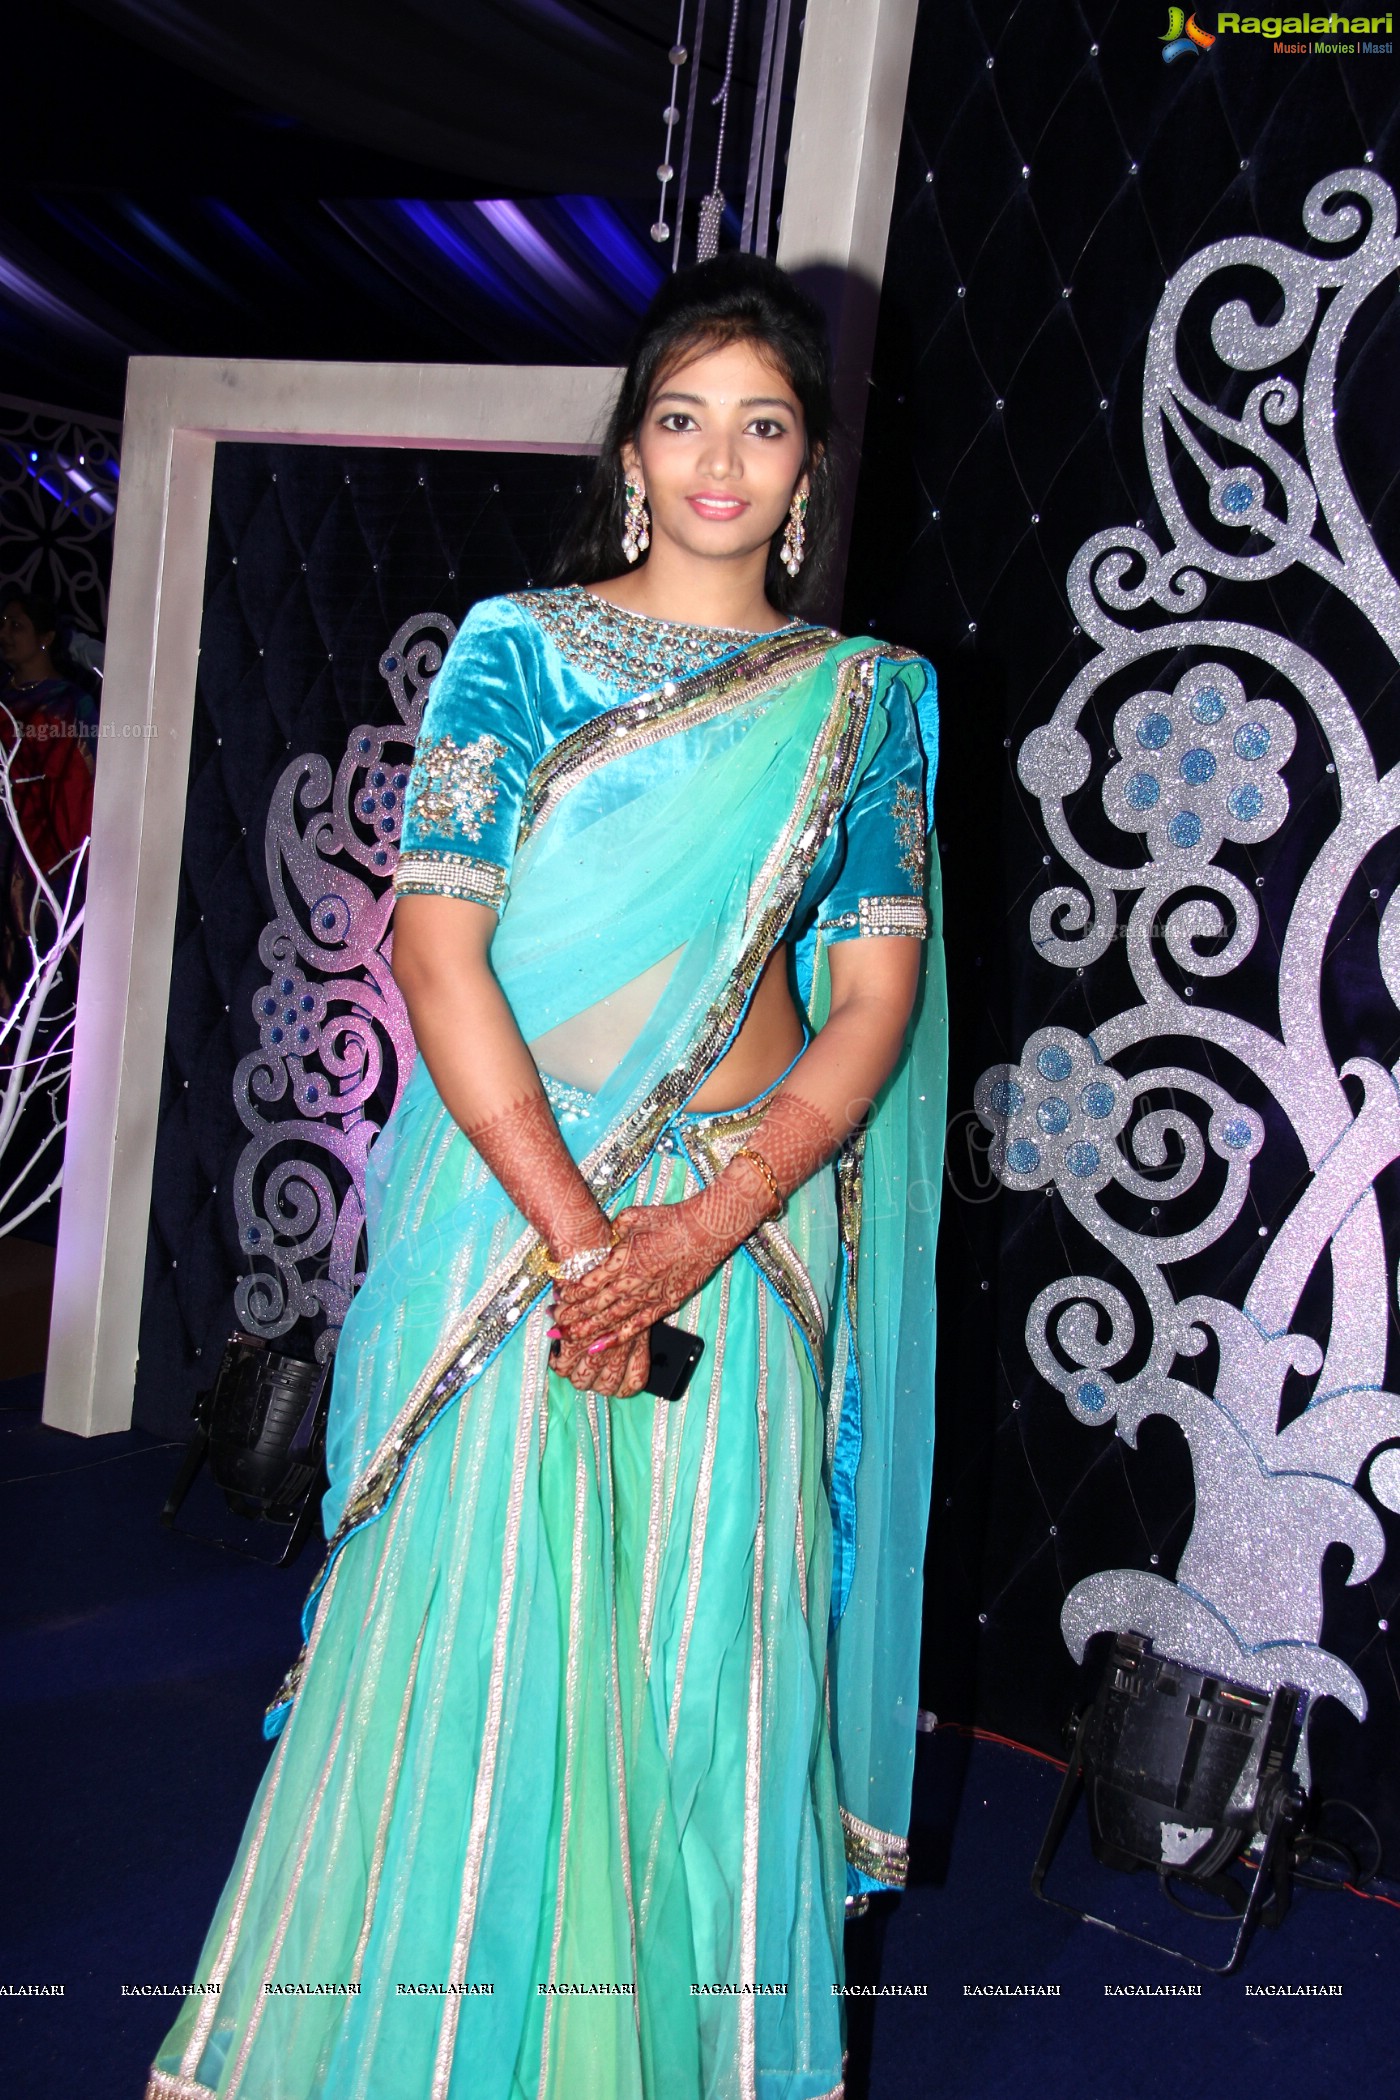 Vijay Sai Reddy's Daughter Neha Wedding Reception